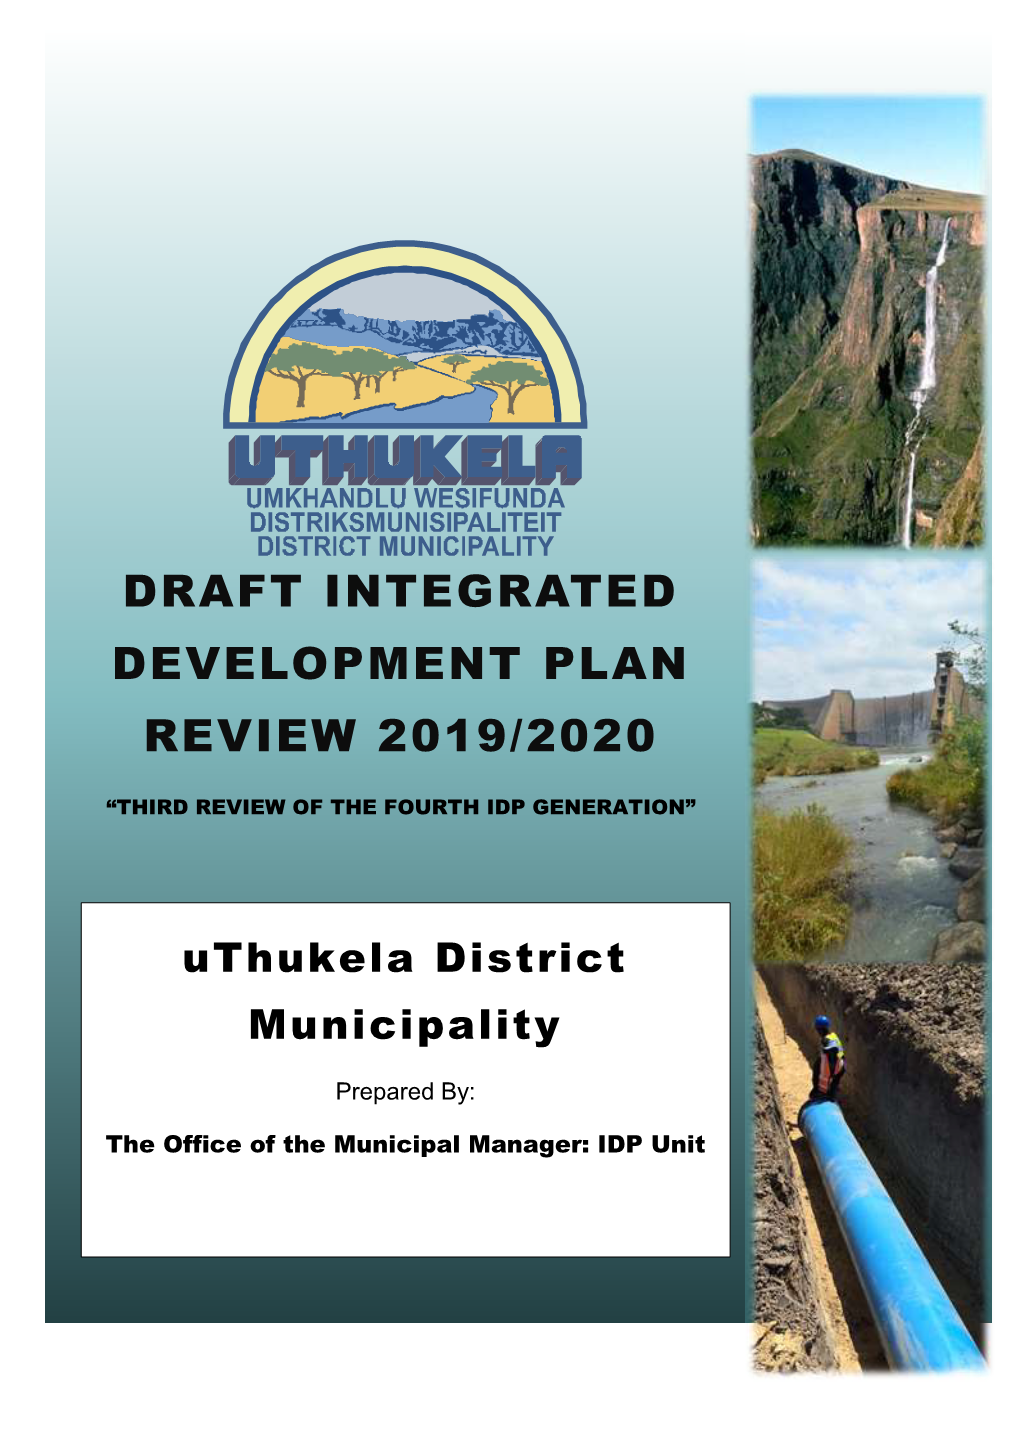 Draft Integrated Development Plan Review 2019/2020